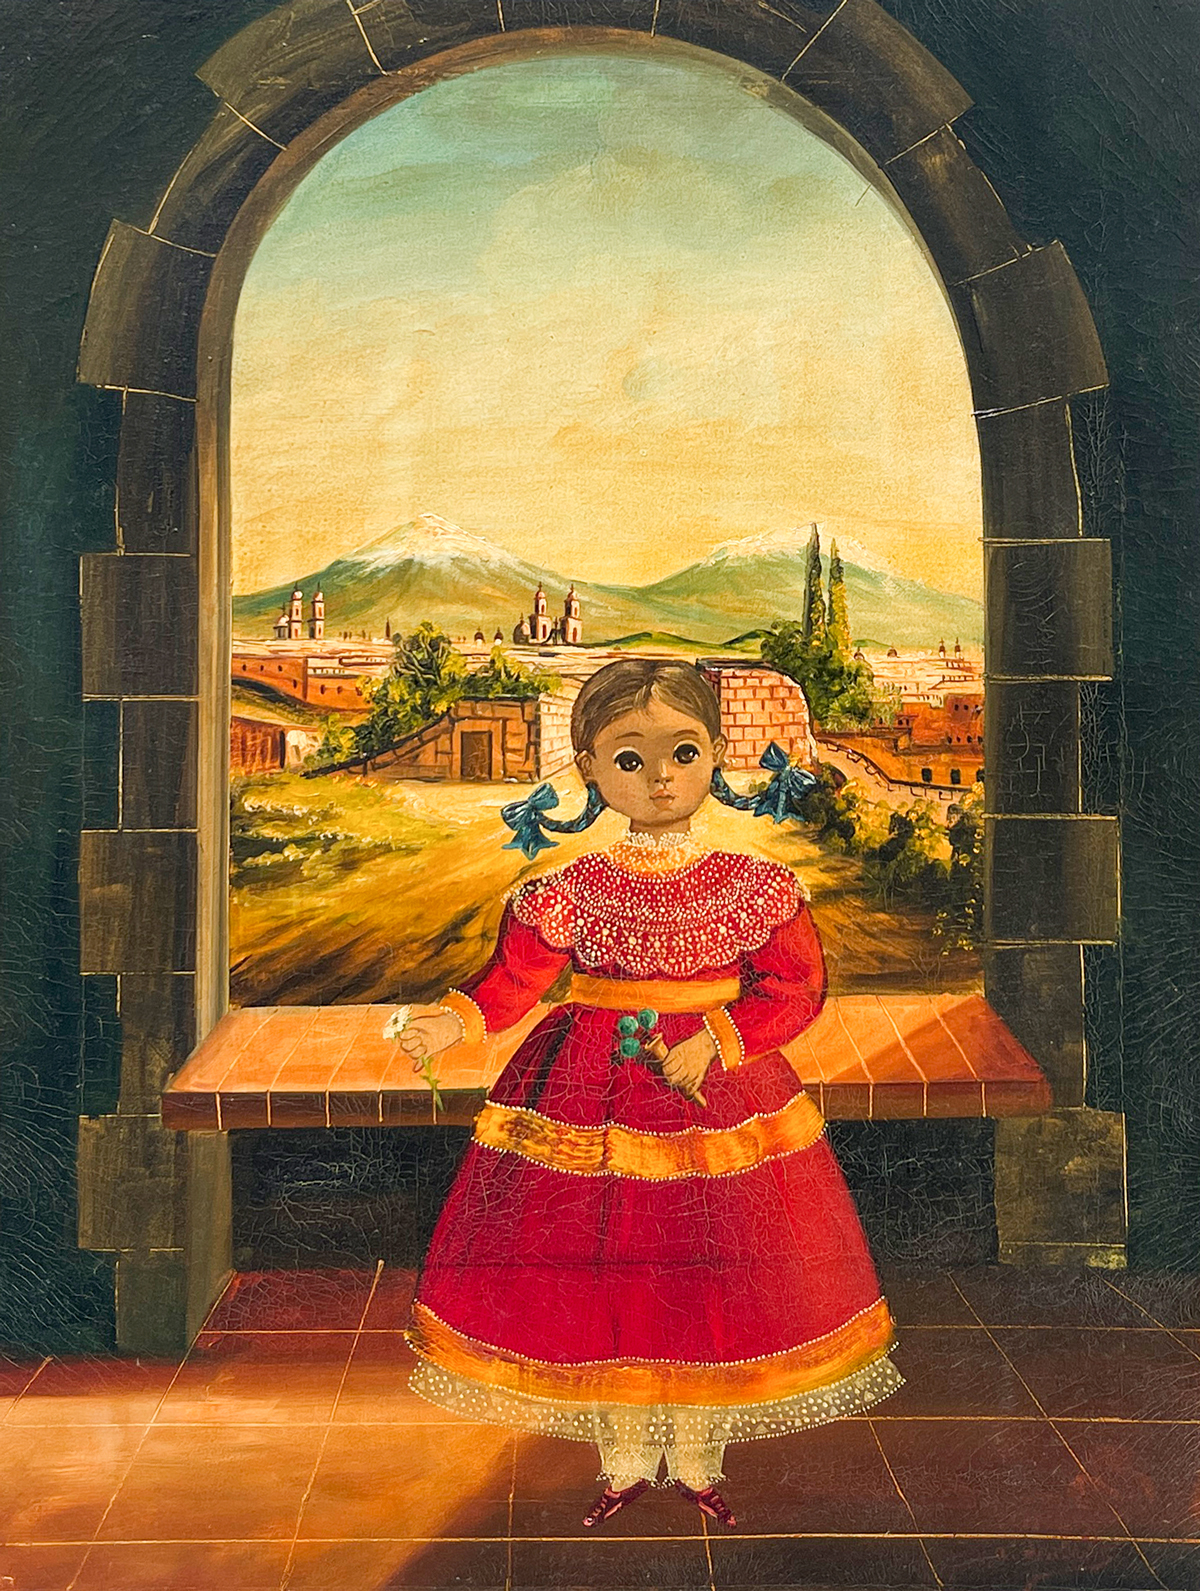 LABIOS, Agapito, (Mexican, 1898-1996):